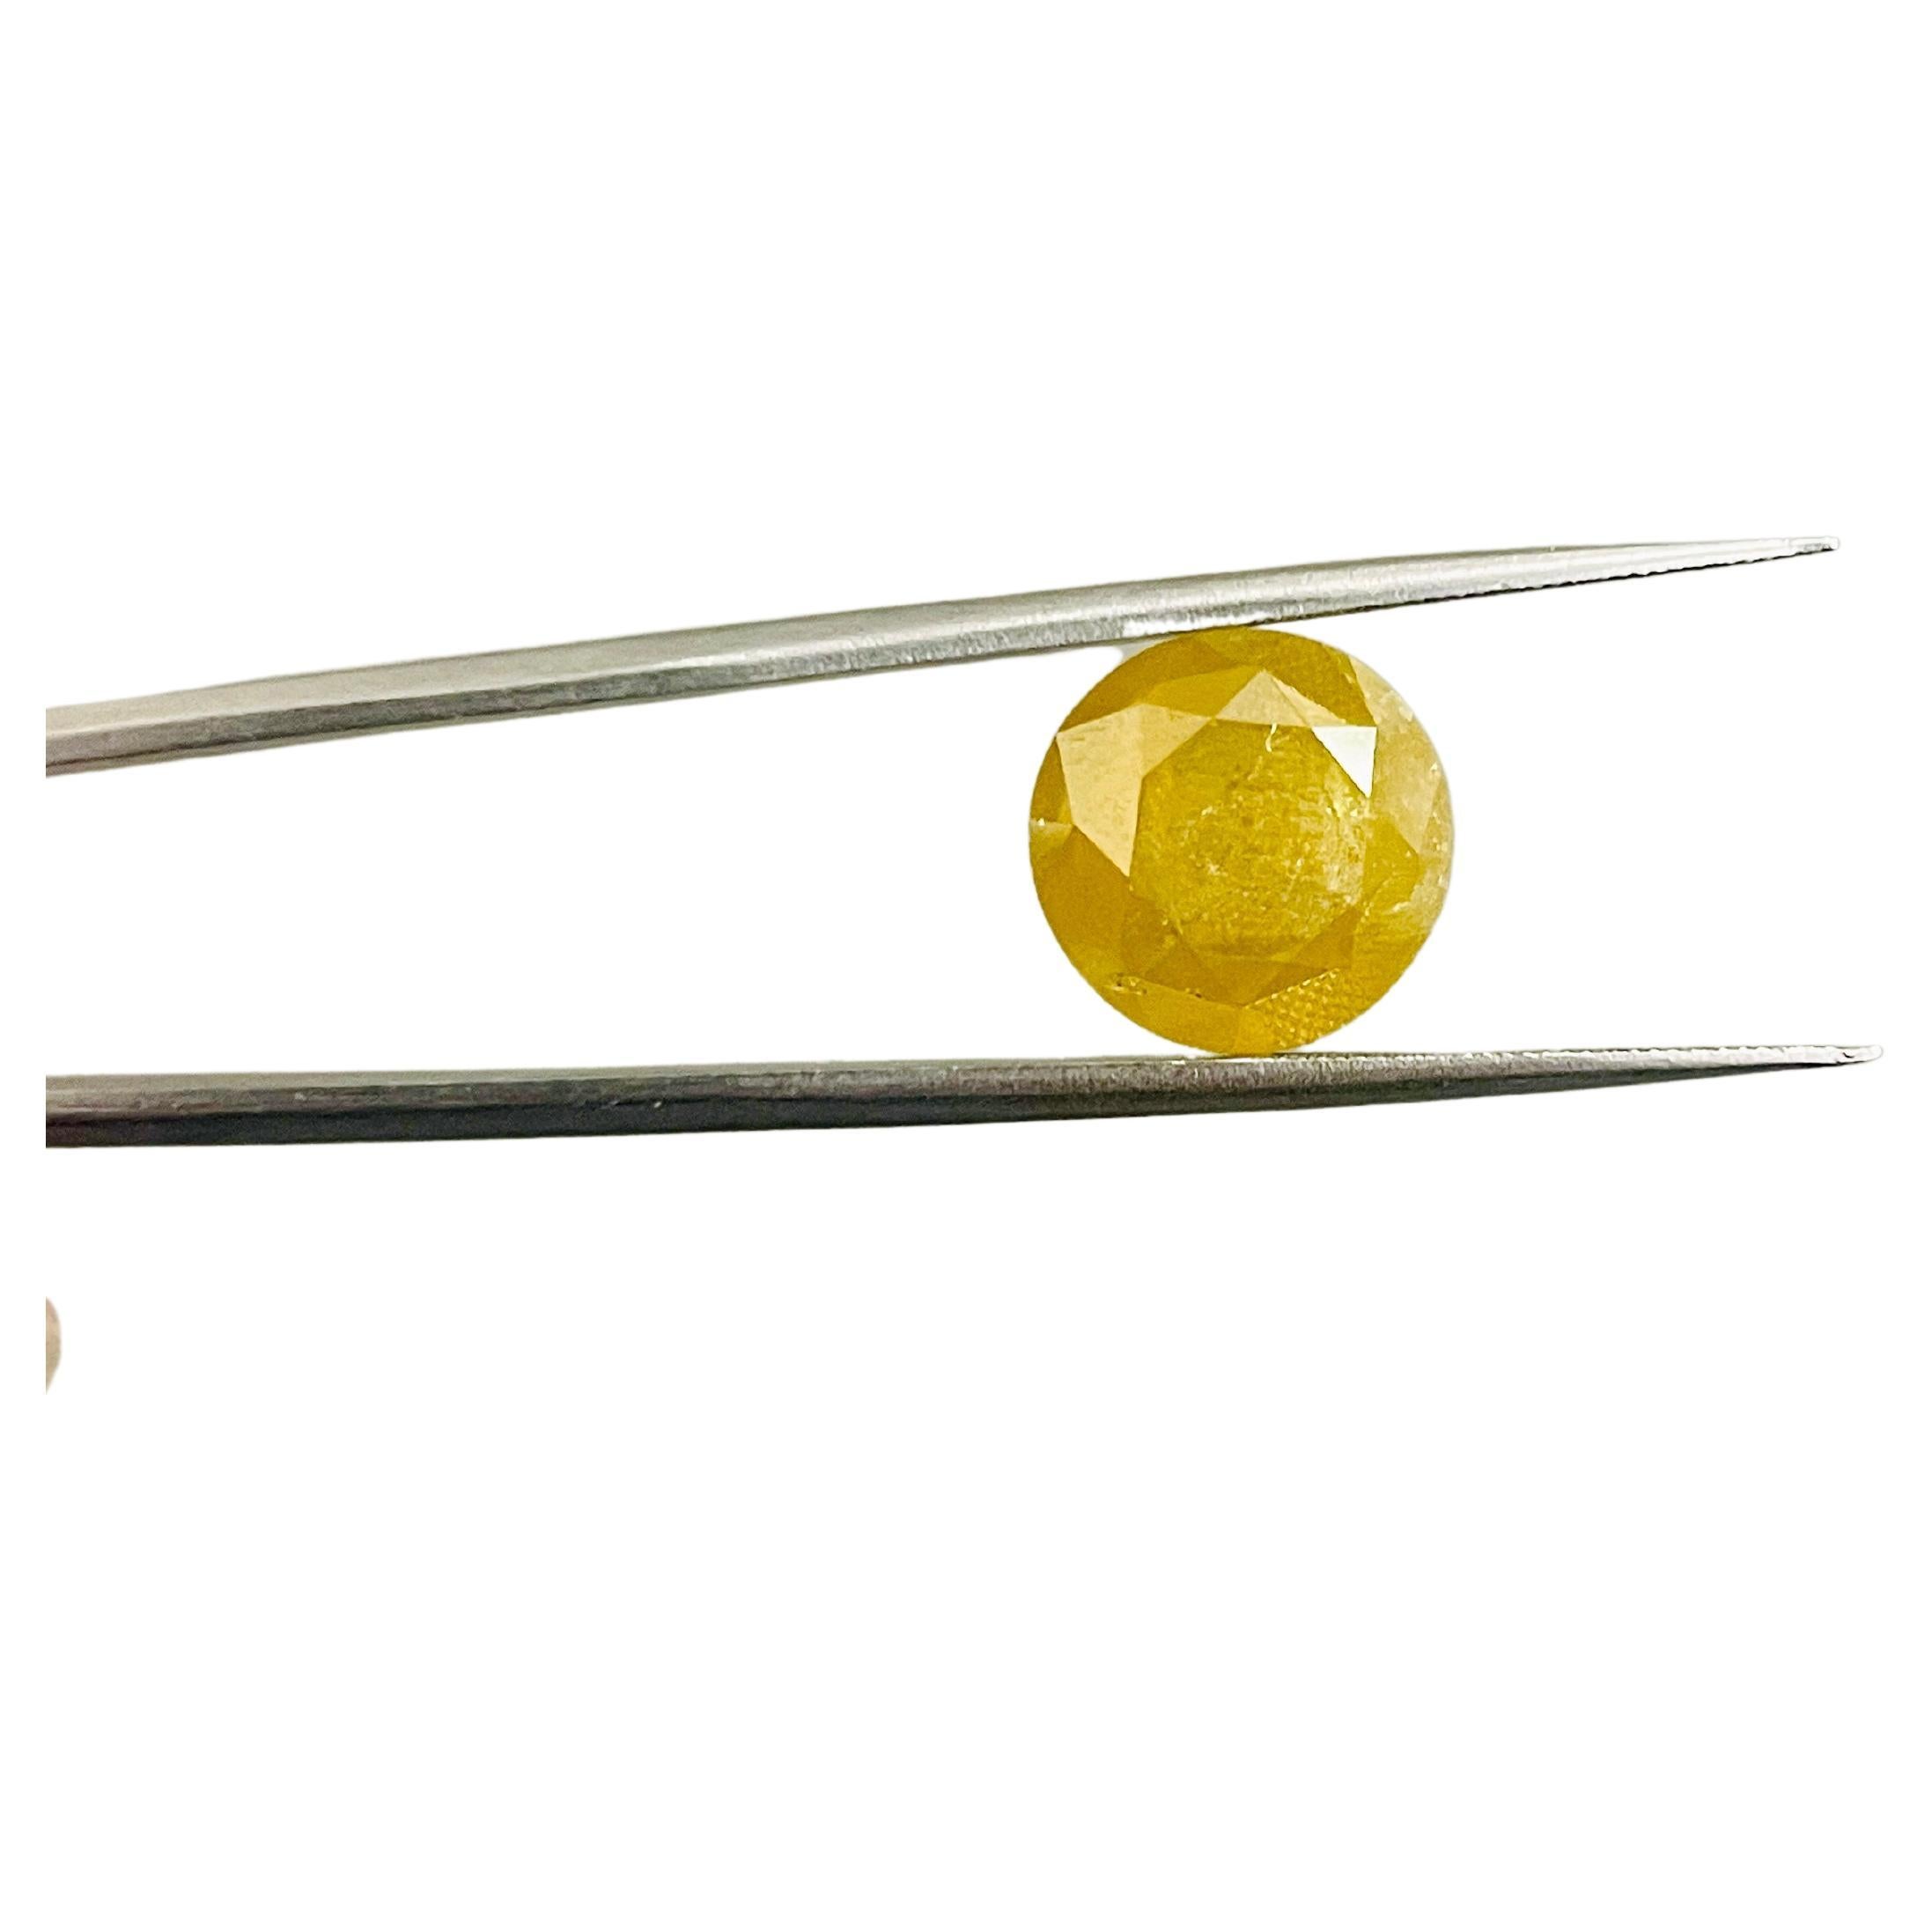 GIA 8.17 Carat Natural Fancy Yellow Round Loose Diamond